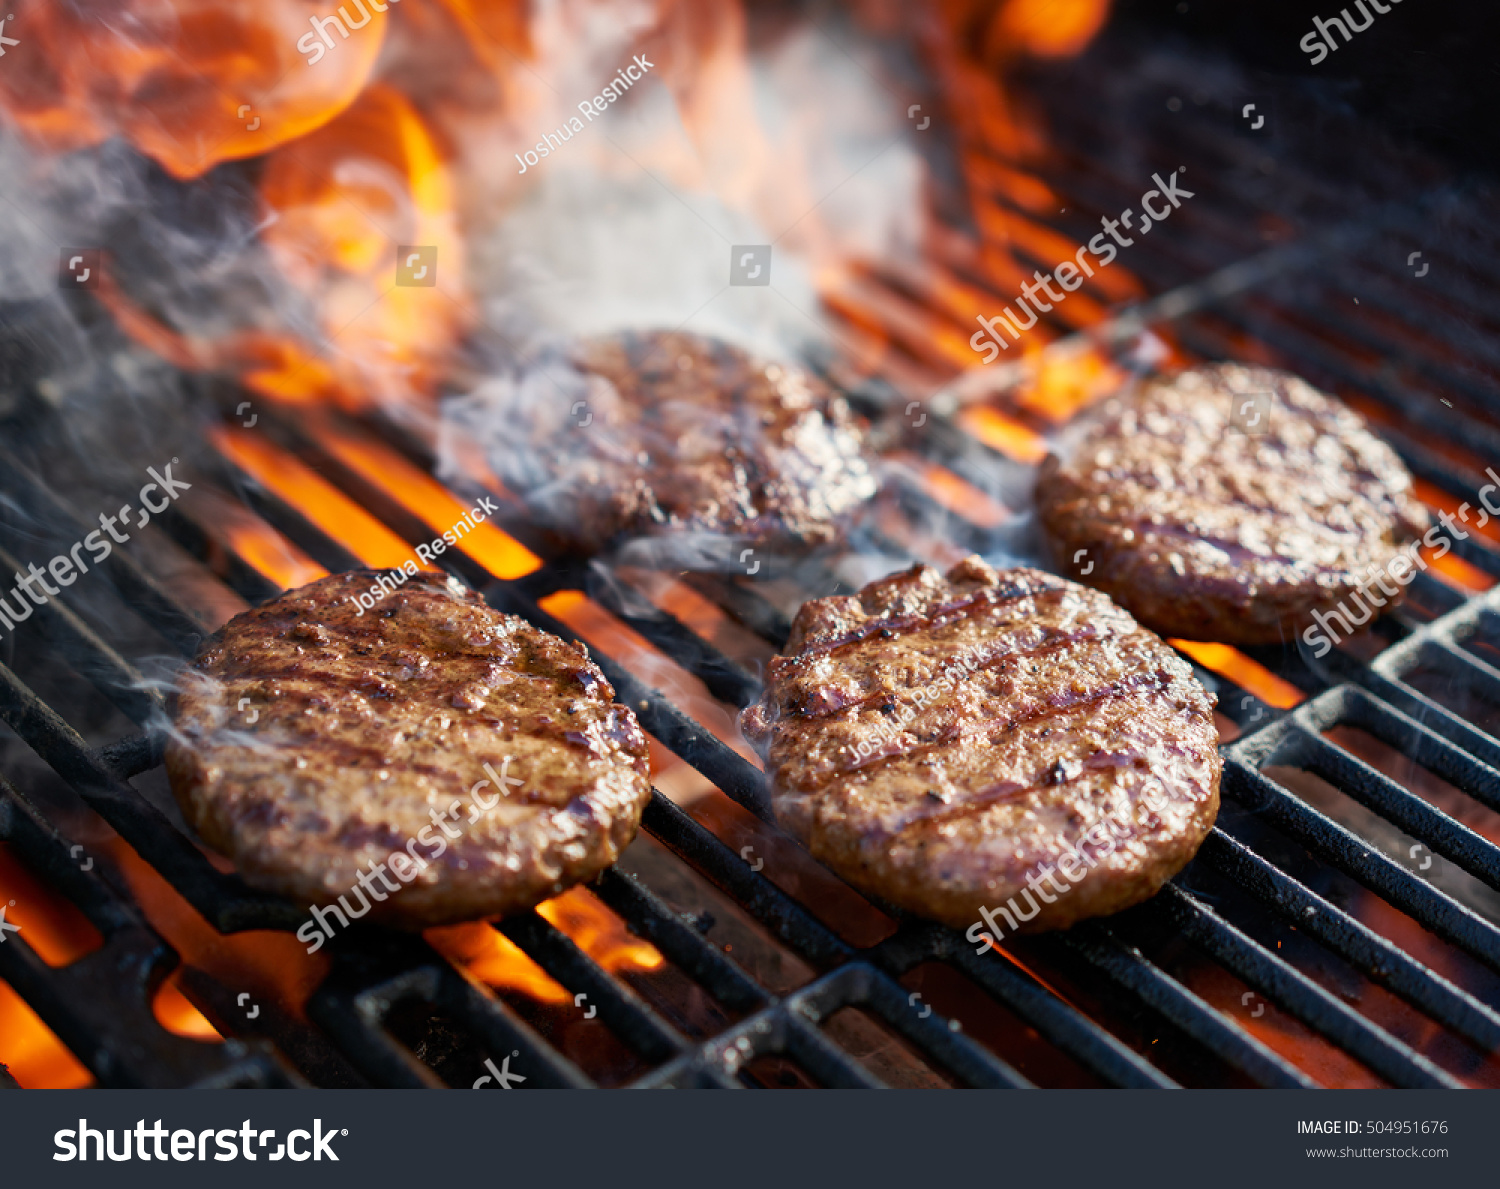 58,199 Hamburger patty Images, Stock Photos & Vectors | Shutterstock